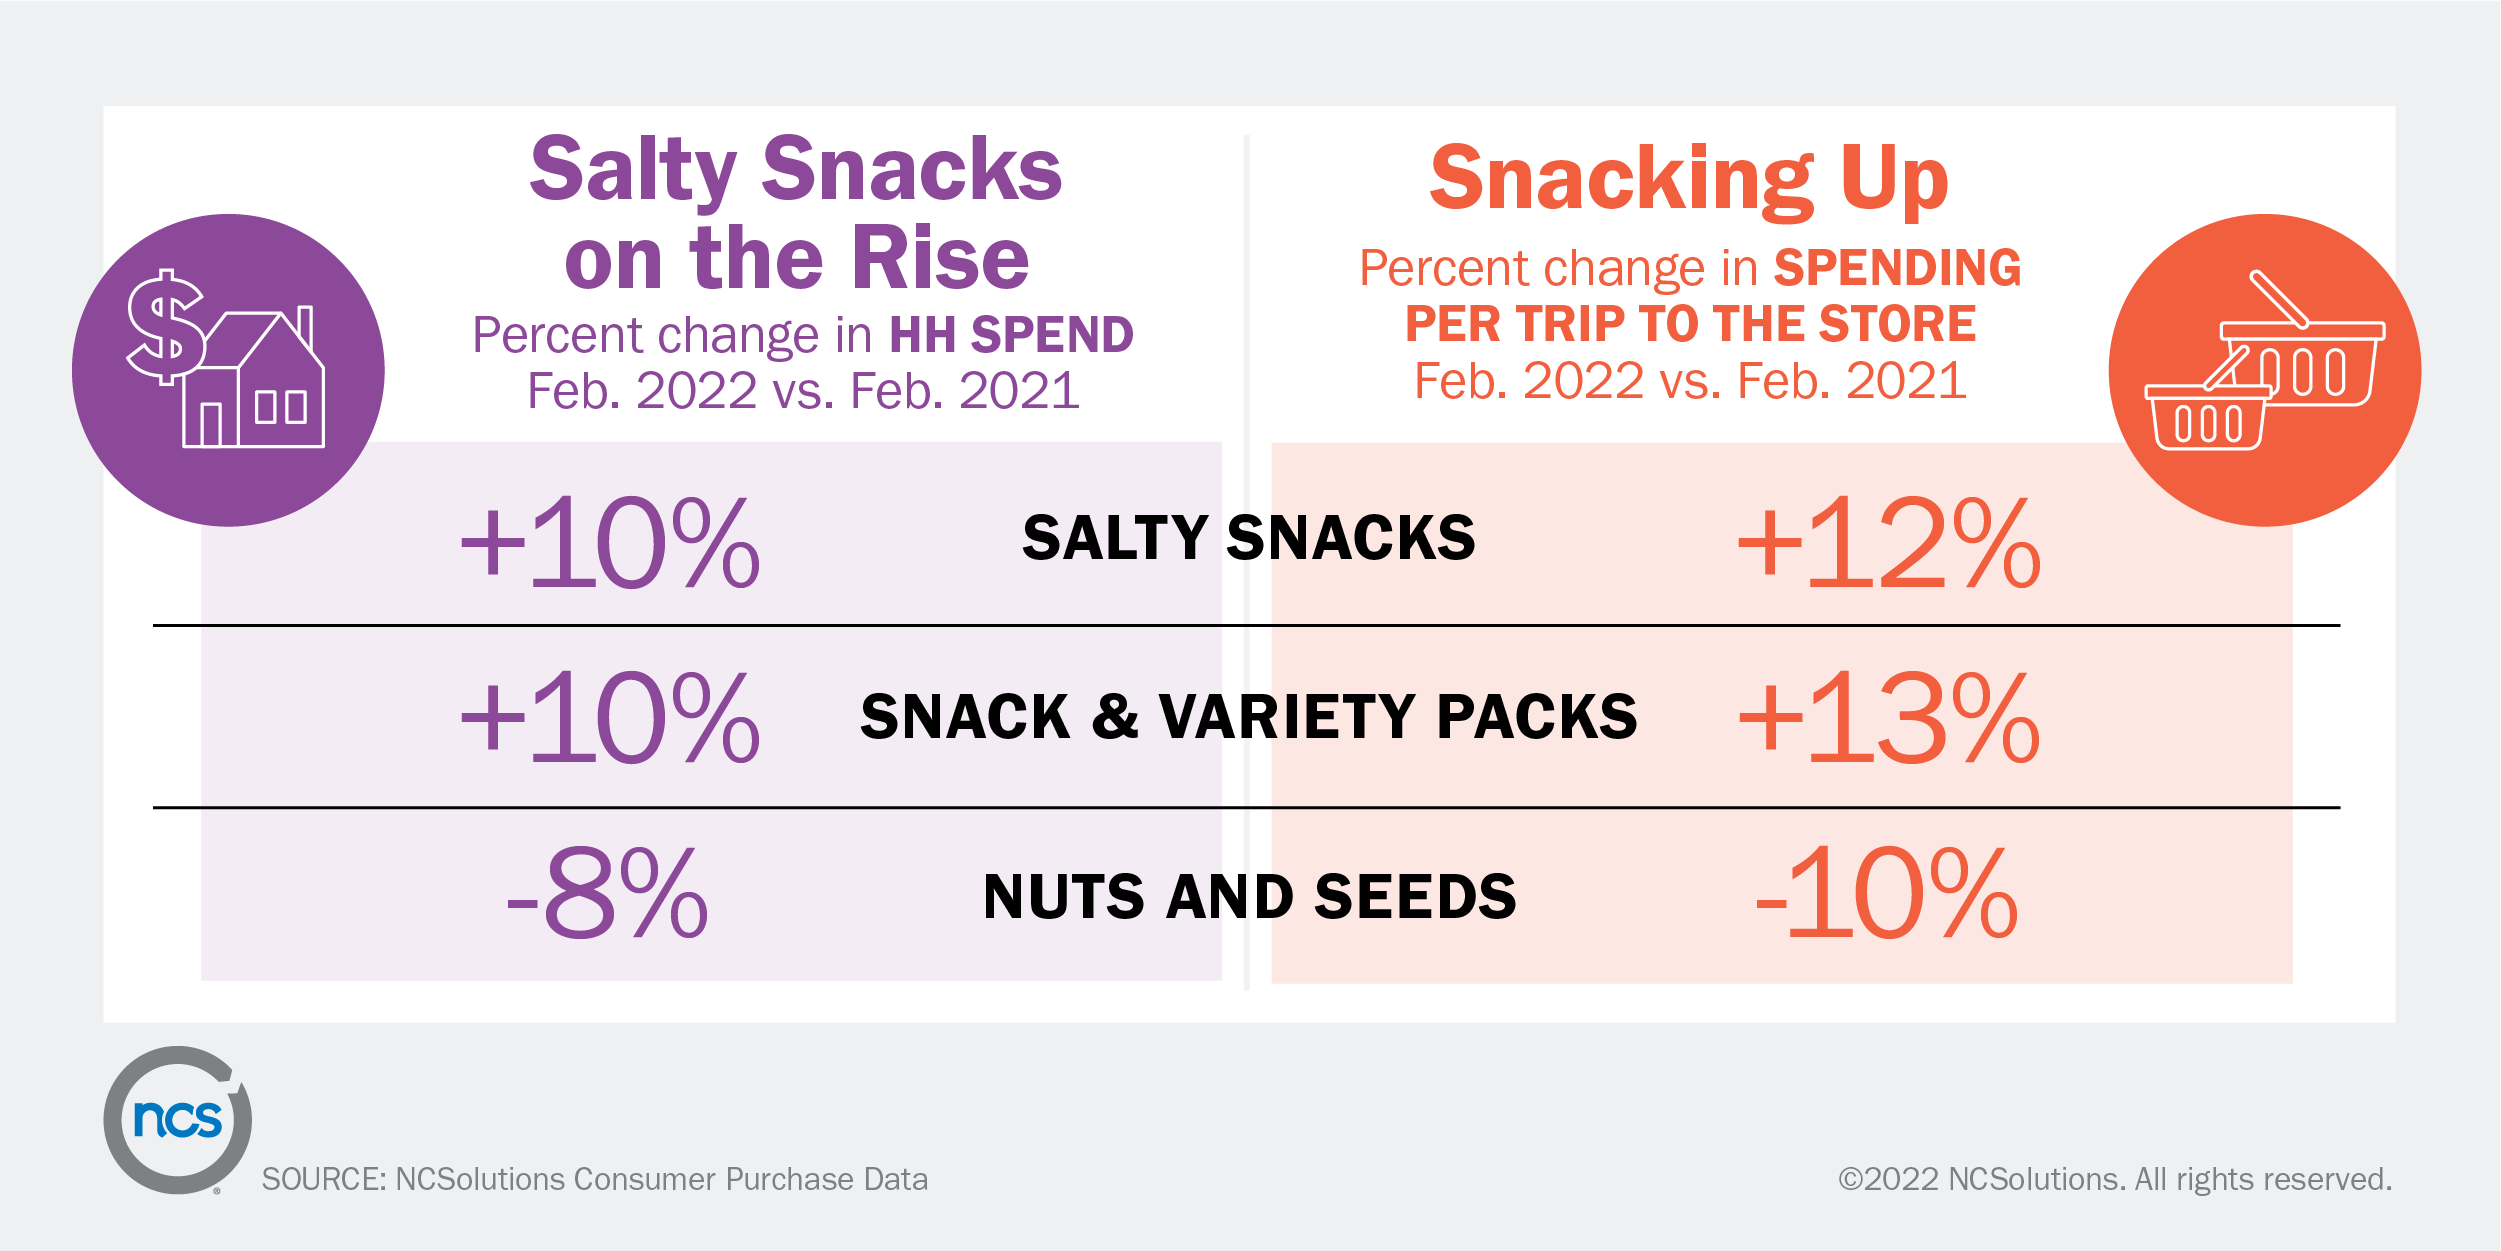 Part A: Household spend on salty snacks Feb. 2021 vs Feb 2022. Part B: Percent change per trip to the store Feb. 2021 vs. Feb. 2022.